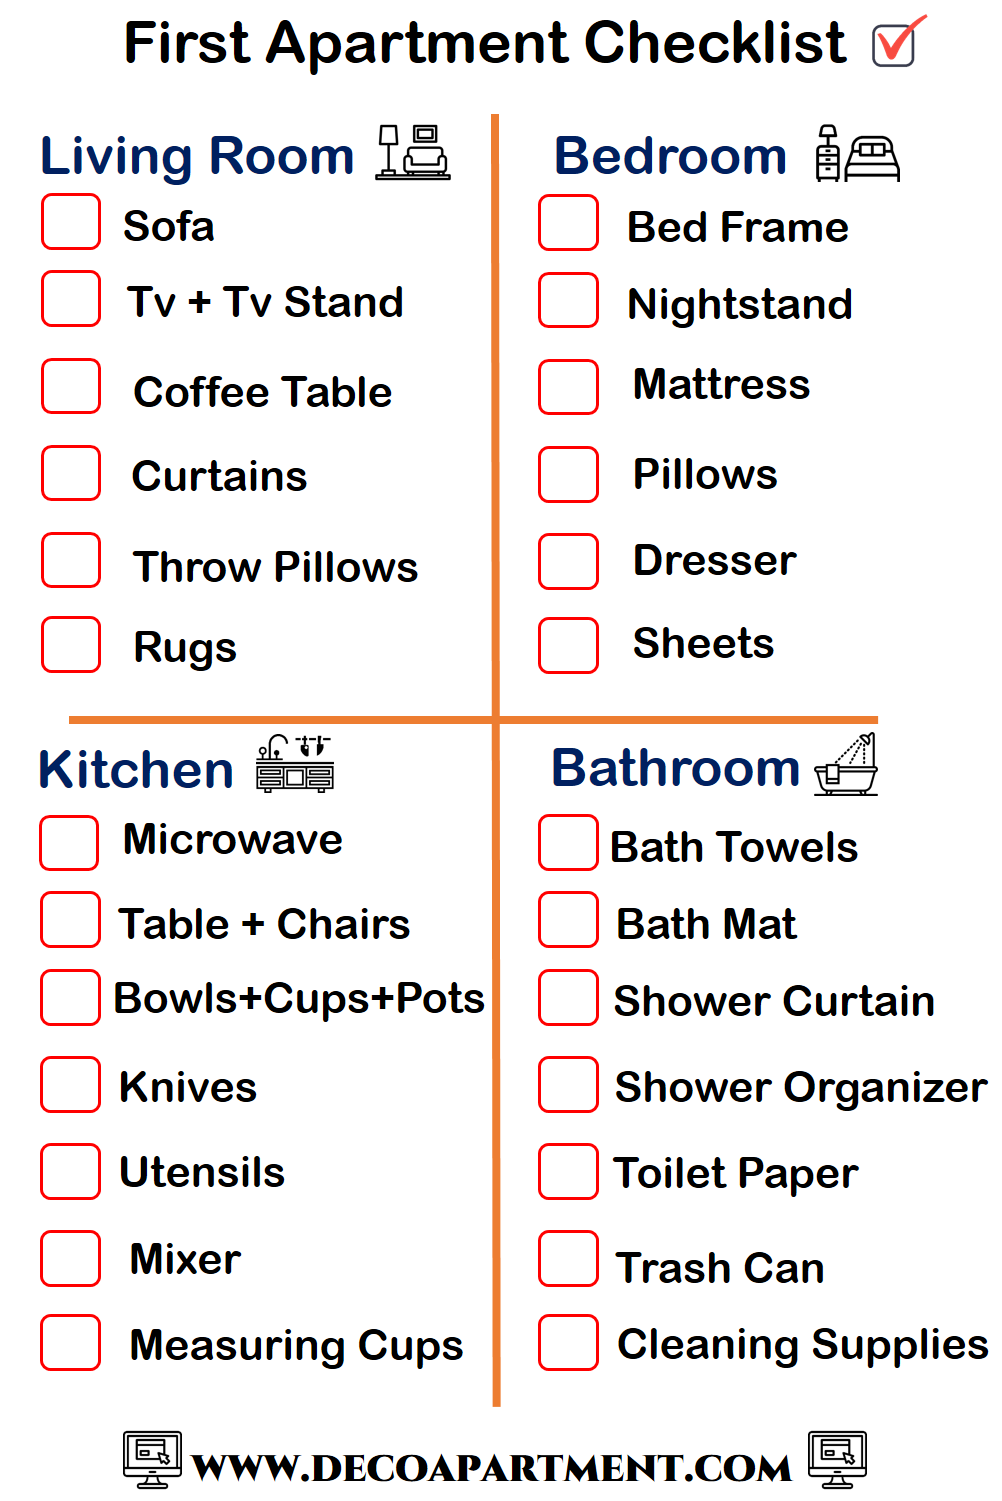 Apartment Checklist: Printable First Apartment Essentials Checklist  First  apartment checklist, First apartment essentials, First apartment